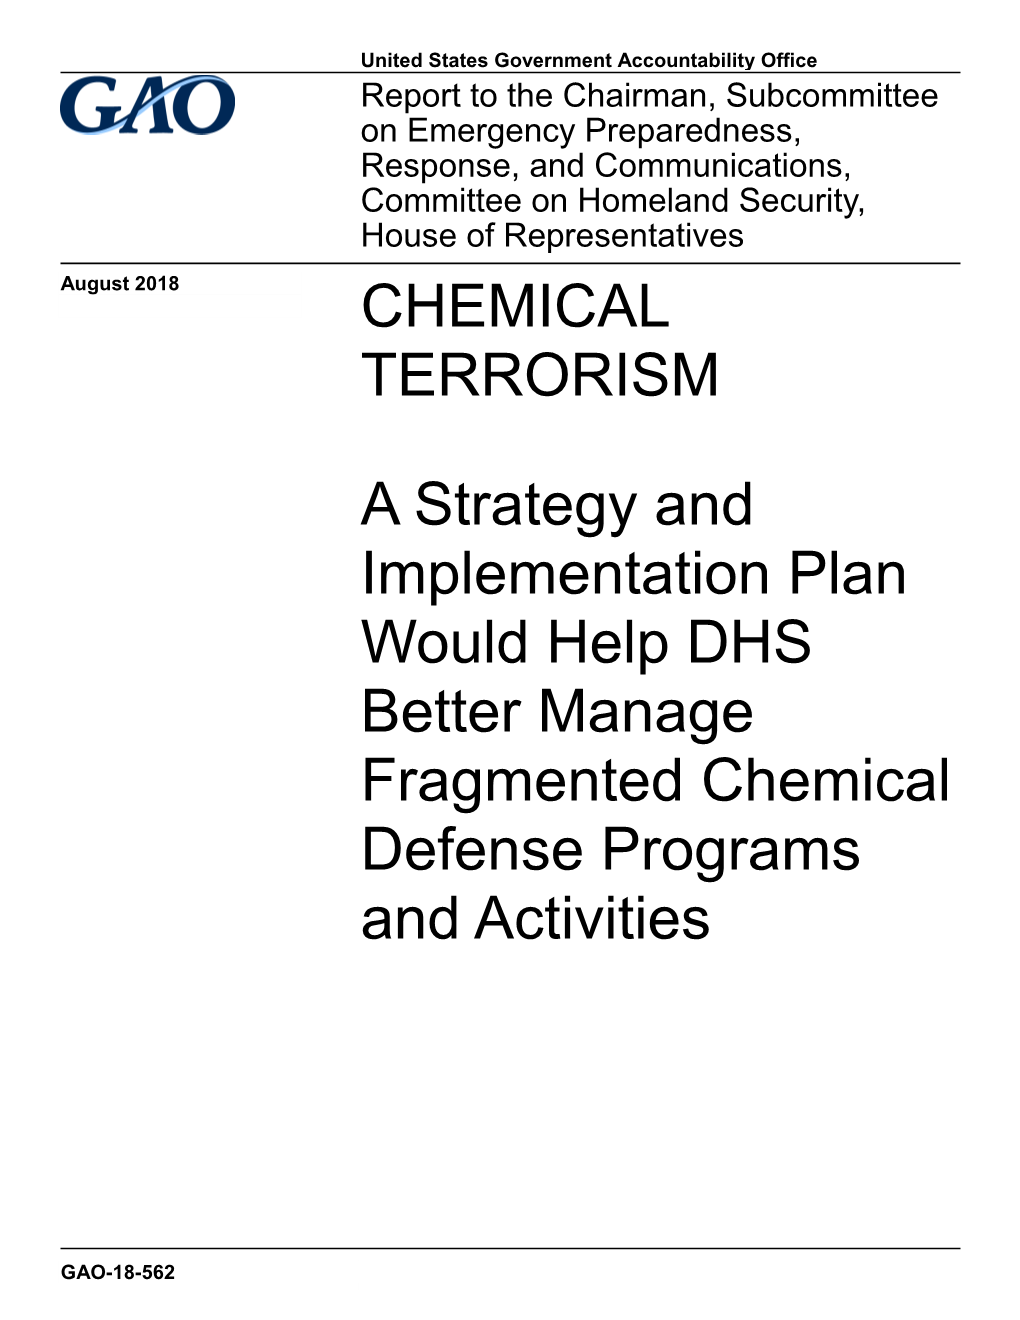 Gao-18-562, Chemical Terrorism